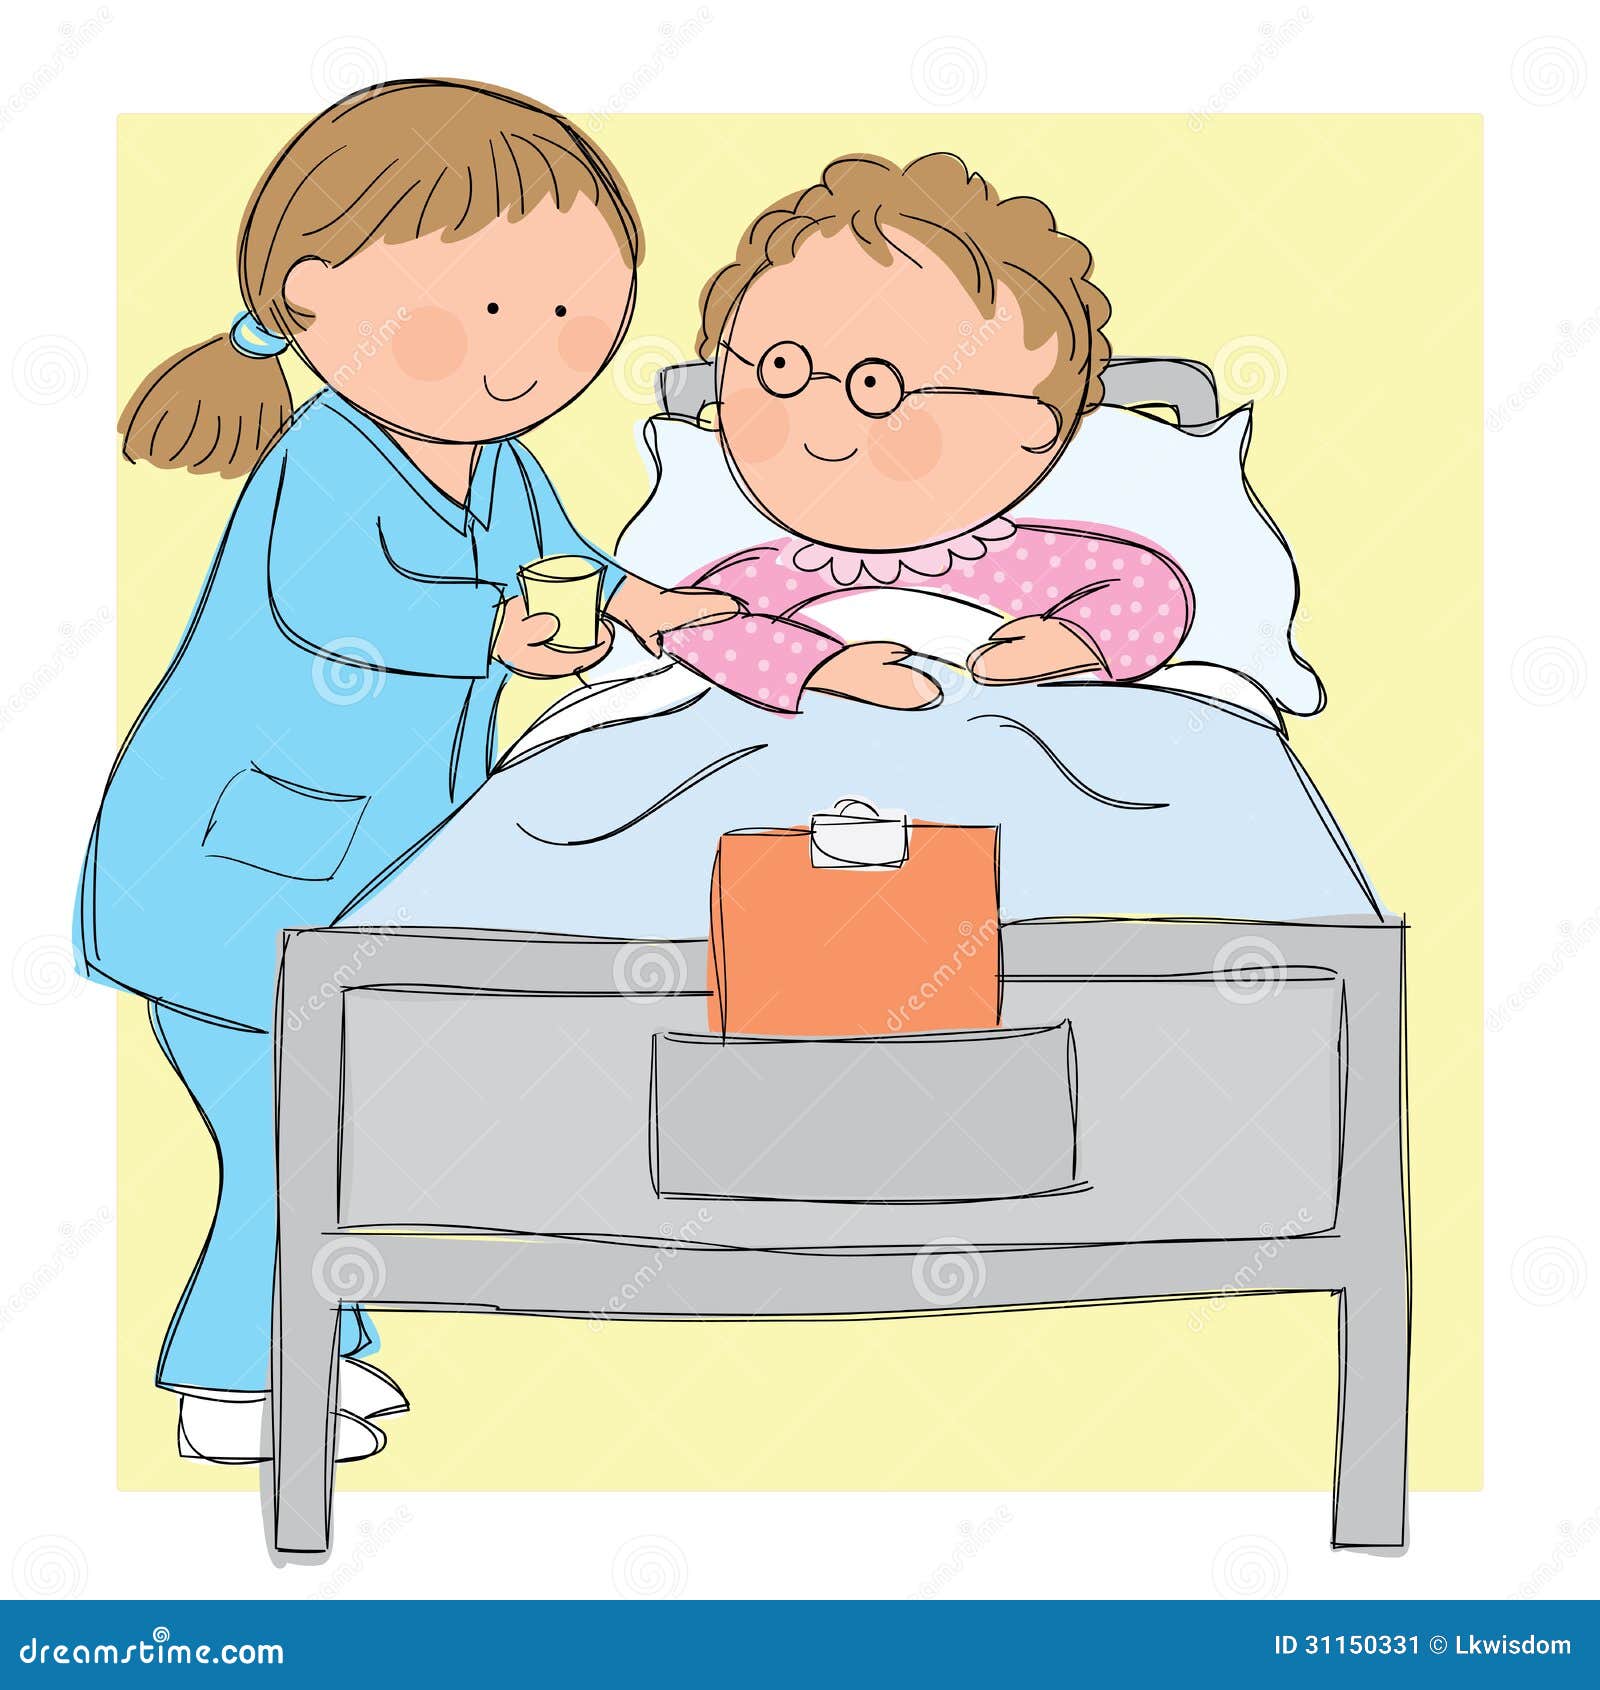 Nursing stock vector. Illustration of assistance, healthcare - 31150331